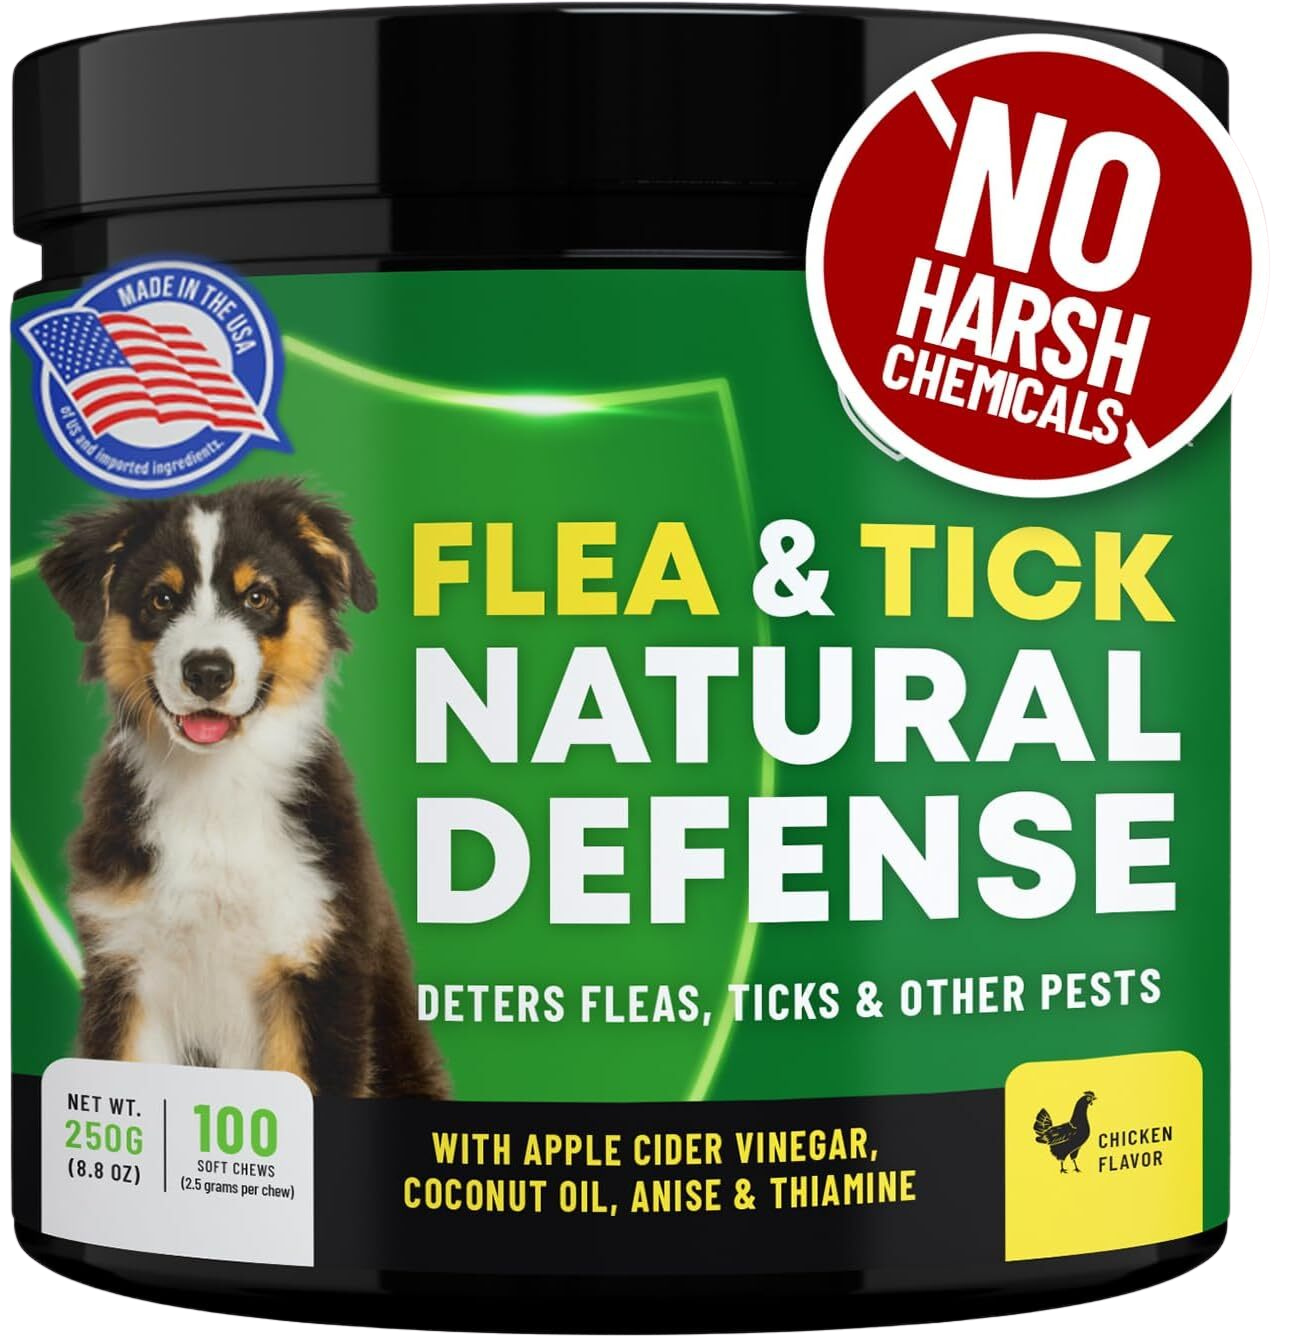 GCP Flea & Tick Natural Defense for Dogs - 100 Soft Chews